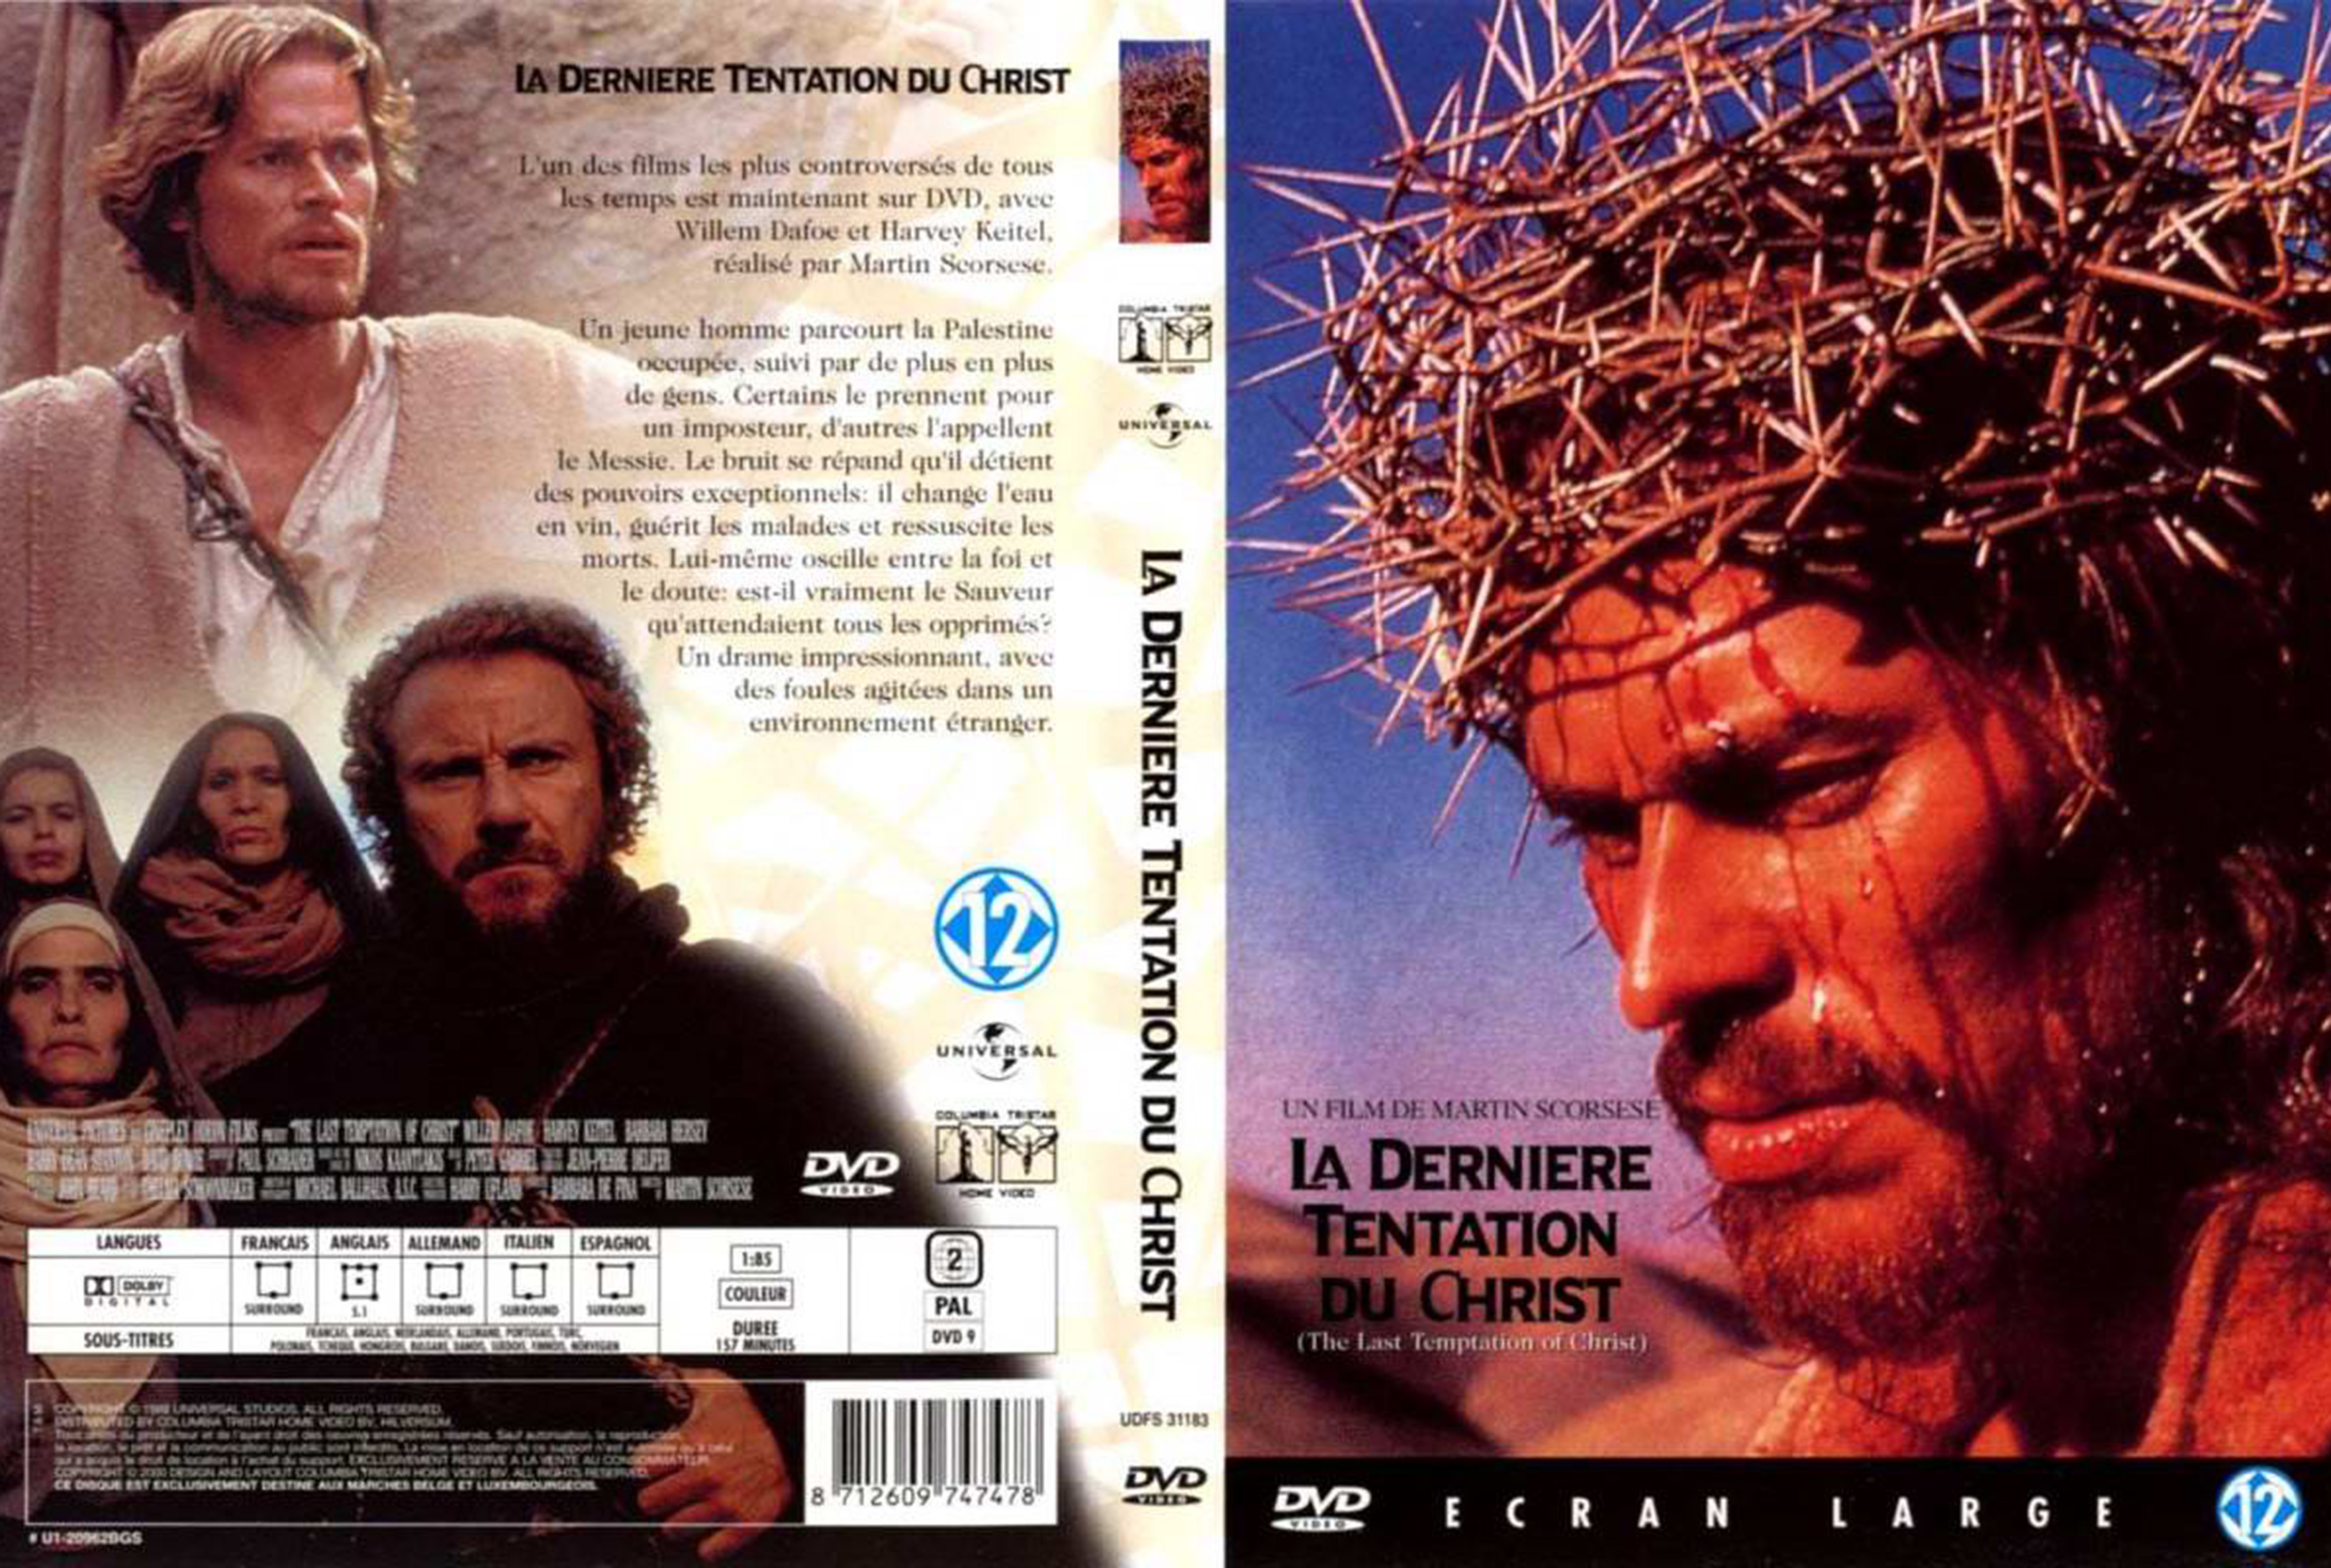 Jaquette DVD La dernire tentation du Christ v3